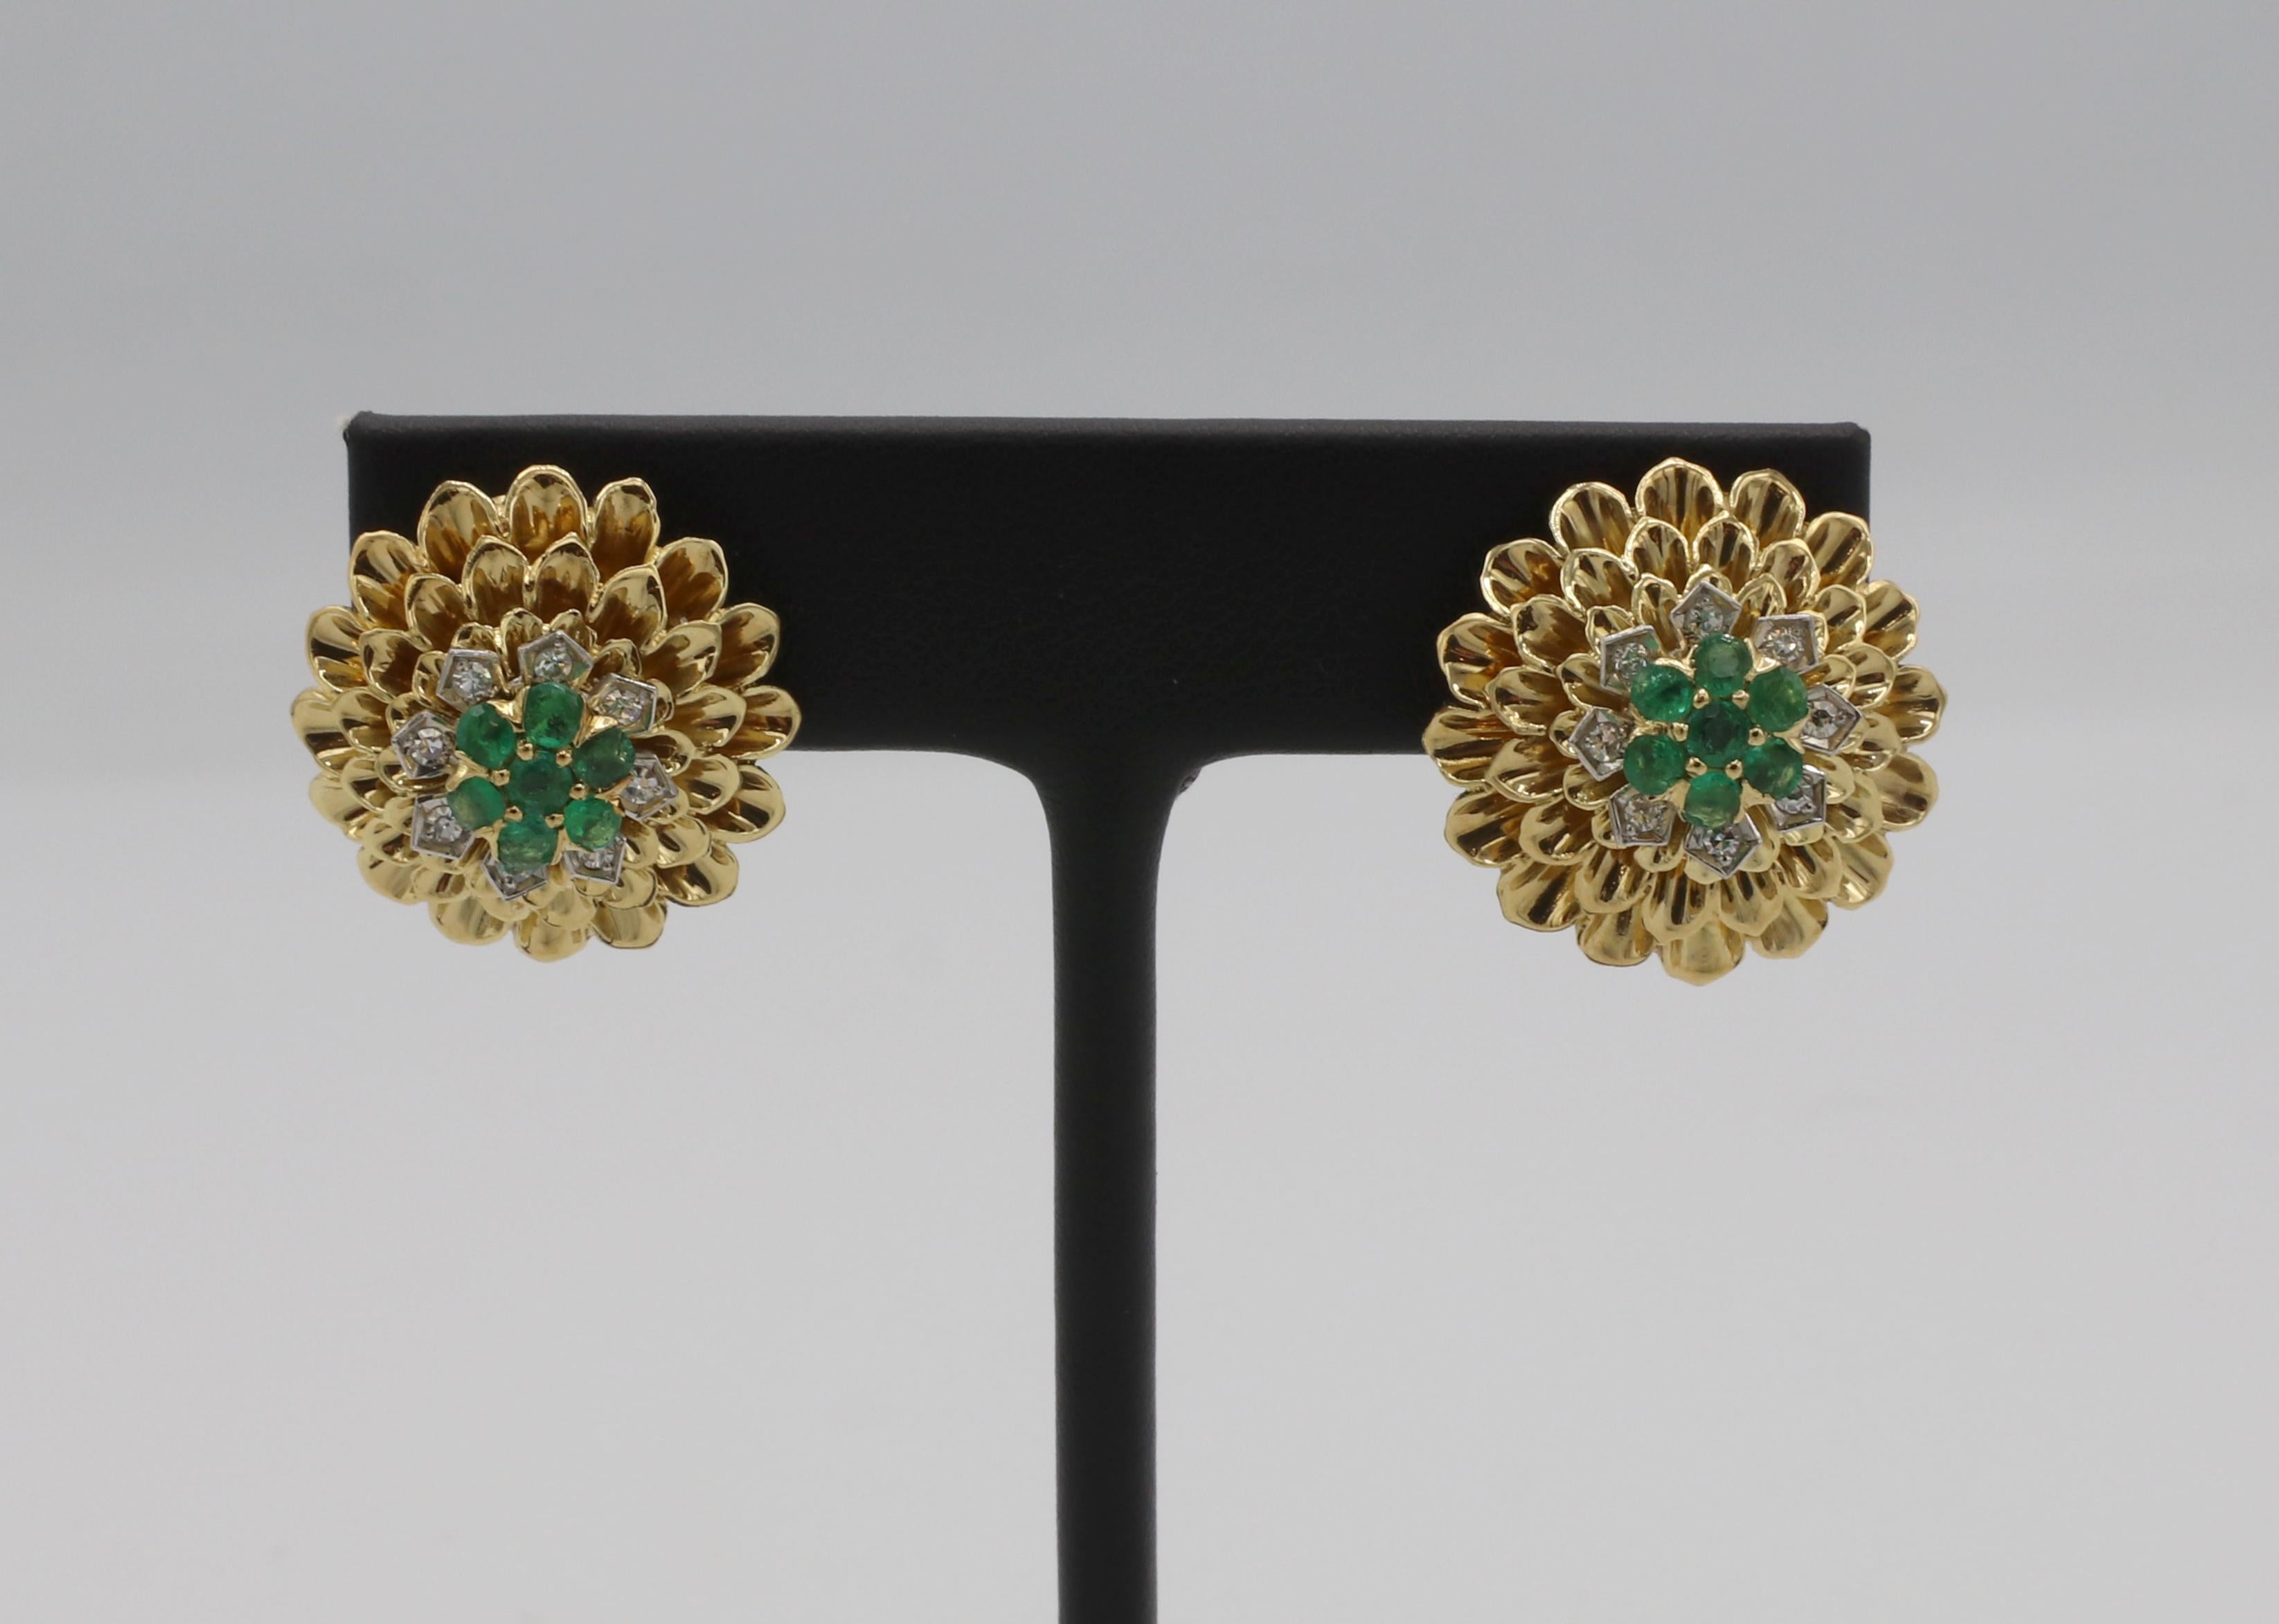 Tiffany & Co. 18 Karat Yellow Gold Emerald & Diamond Dome Earrings 
Metal: 18k yellow gold
Weight: 16.4 grams
Diamonds: Approx. .32 CTW G VS round diamonds
Diameter: 22mm
Height: 11.5mm
Backs: Lever backs with posts
